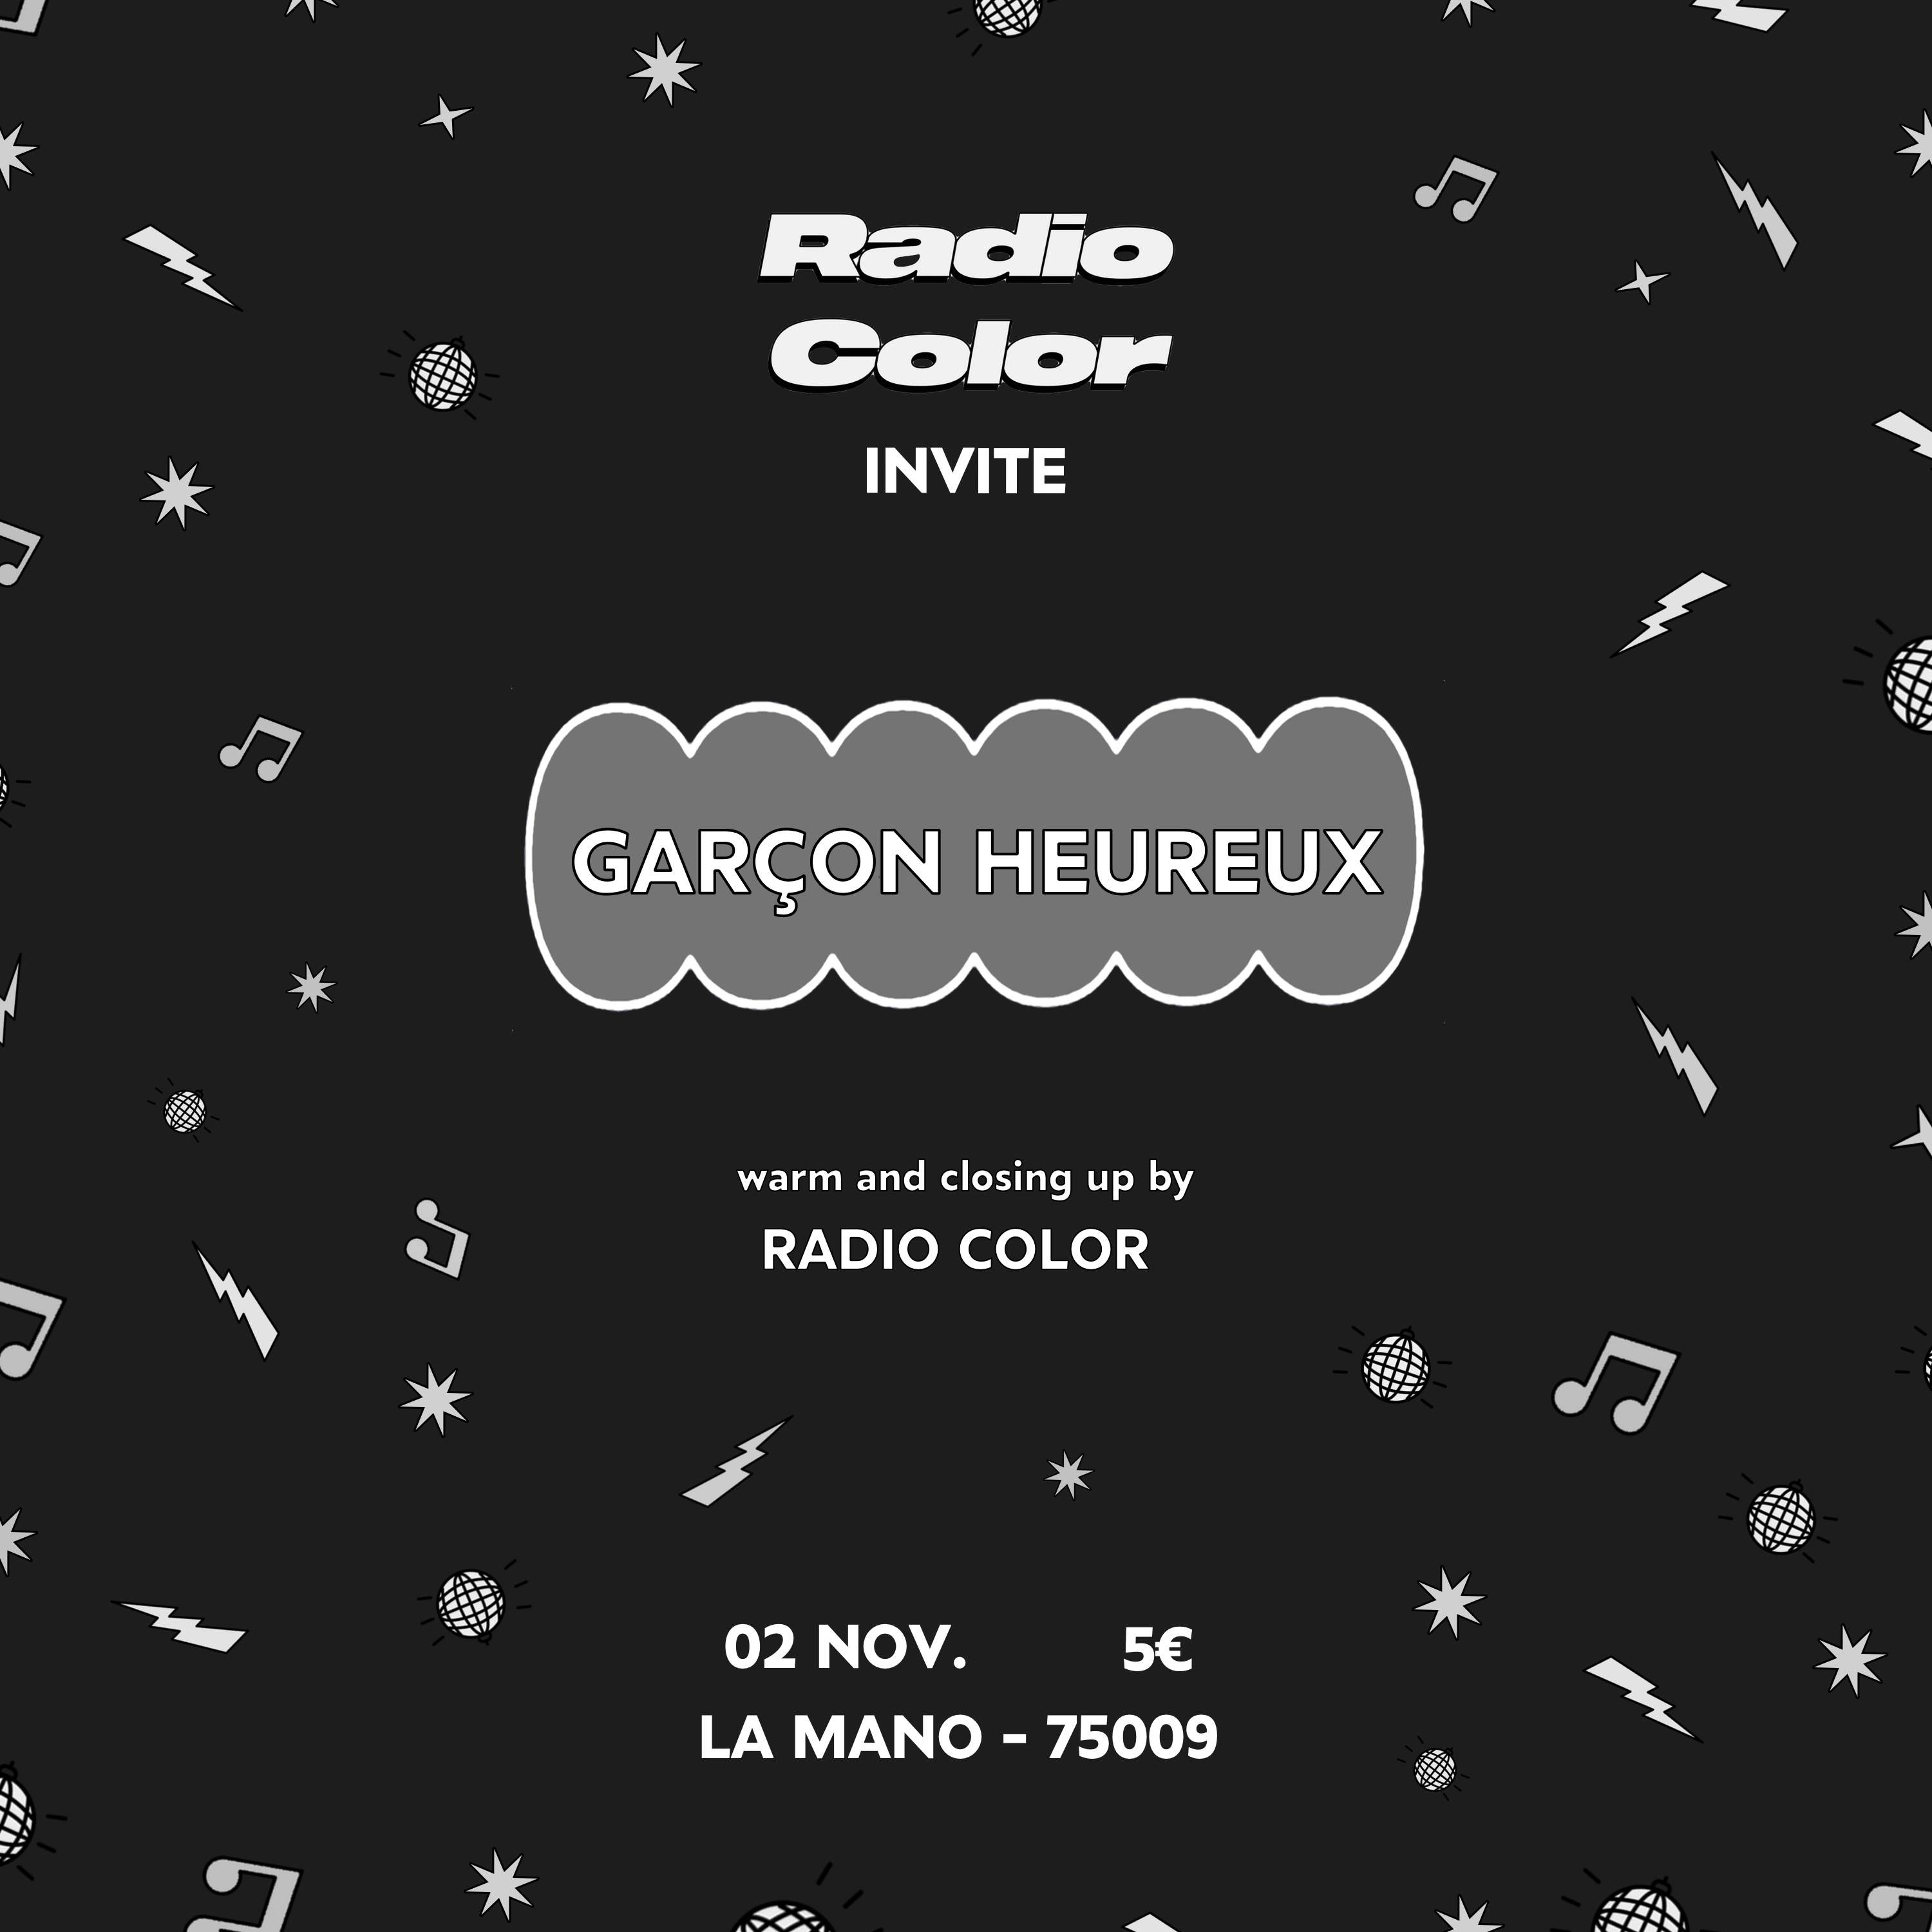 RadioColor invite Garçon Heureux - Página trasera